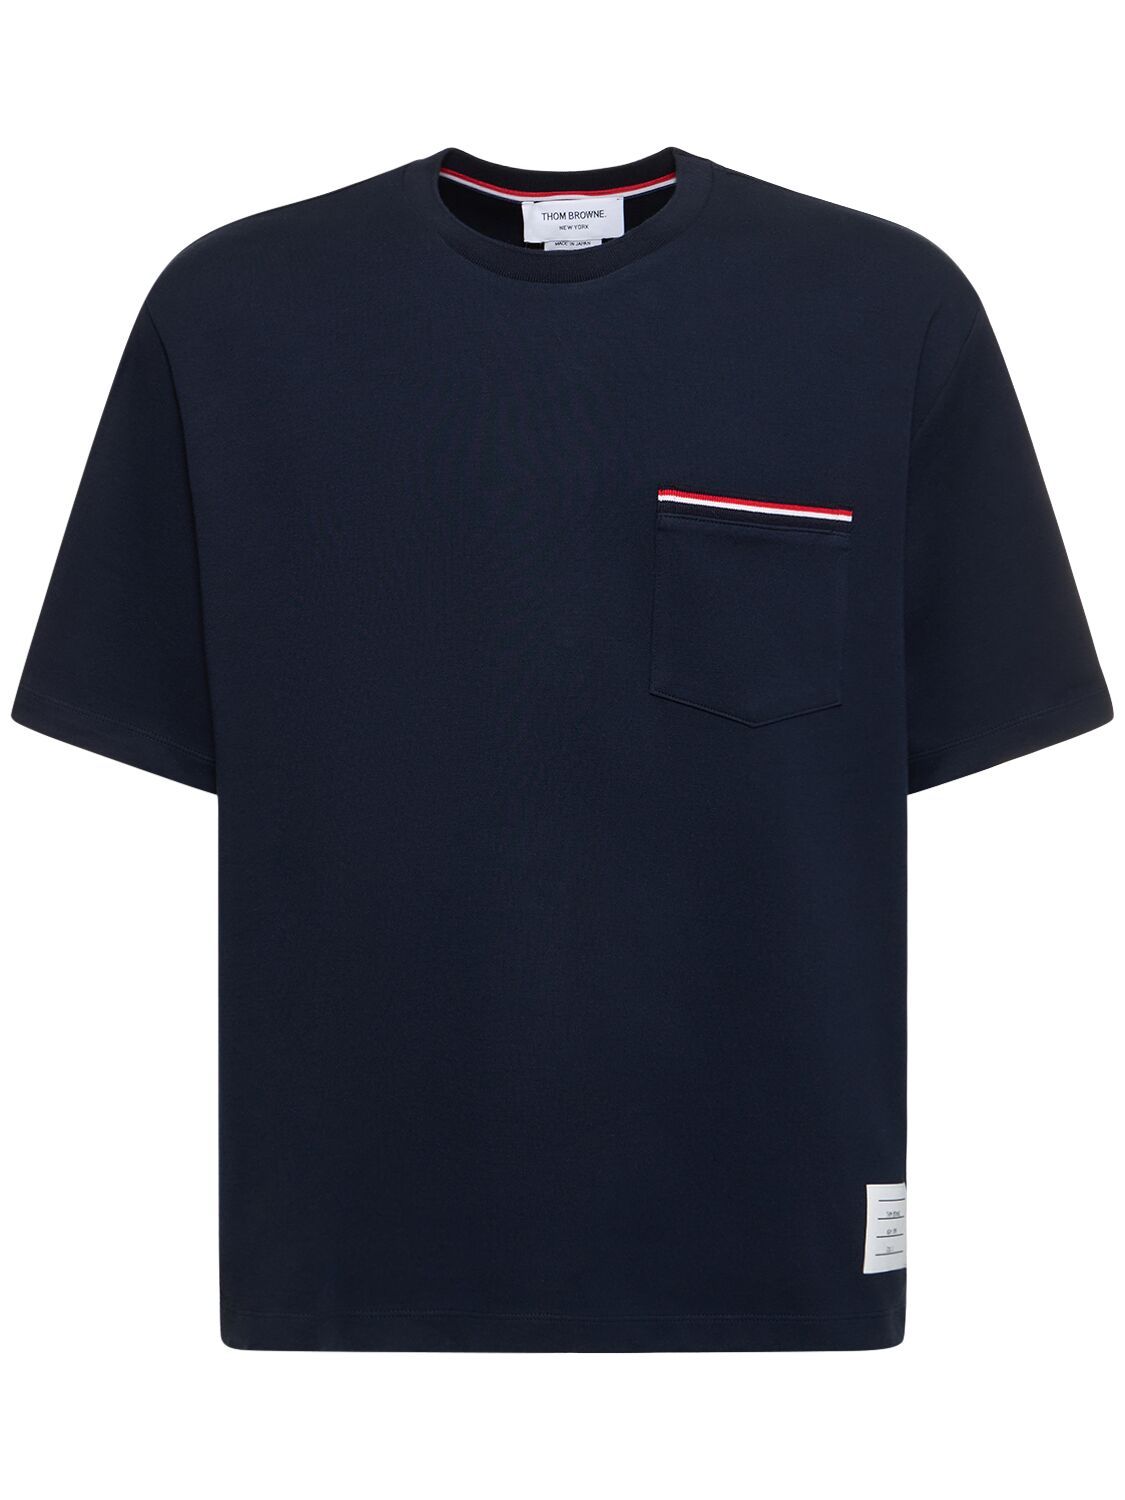 Image of Cotton Jersey T-shirt W/ Striped Trim